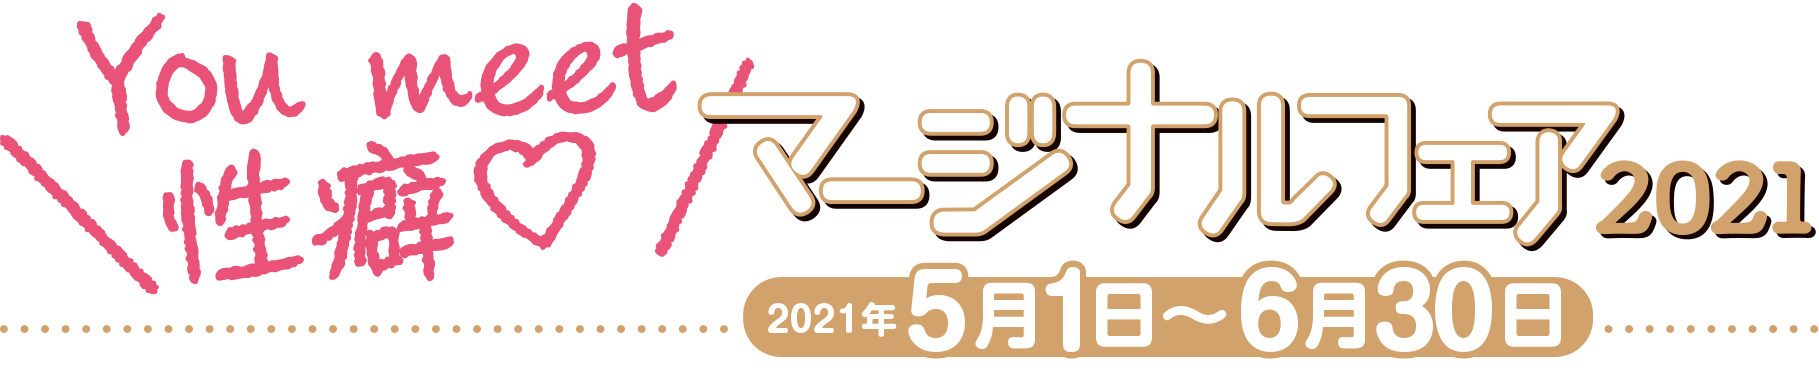 You meet 性癖♡マージナルフェア2021